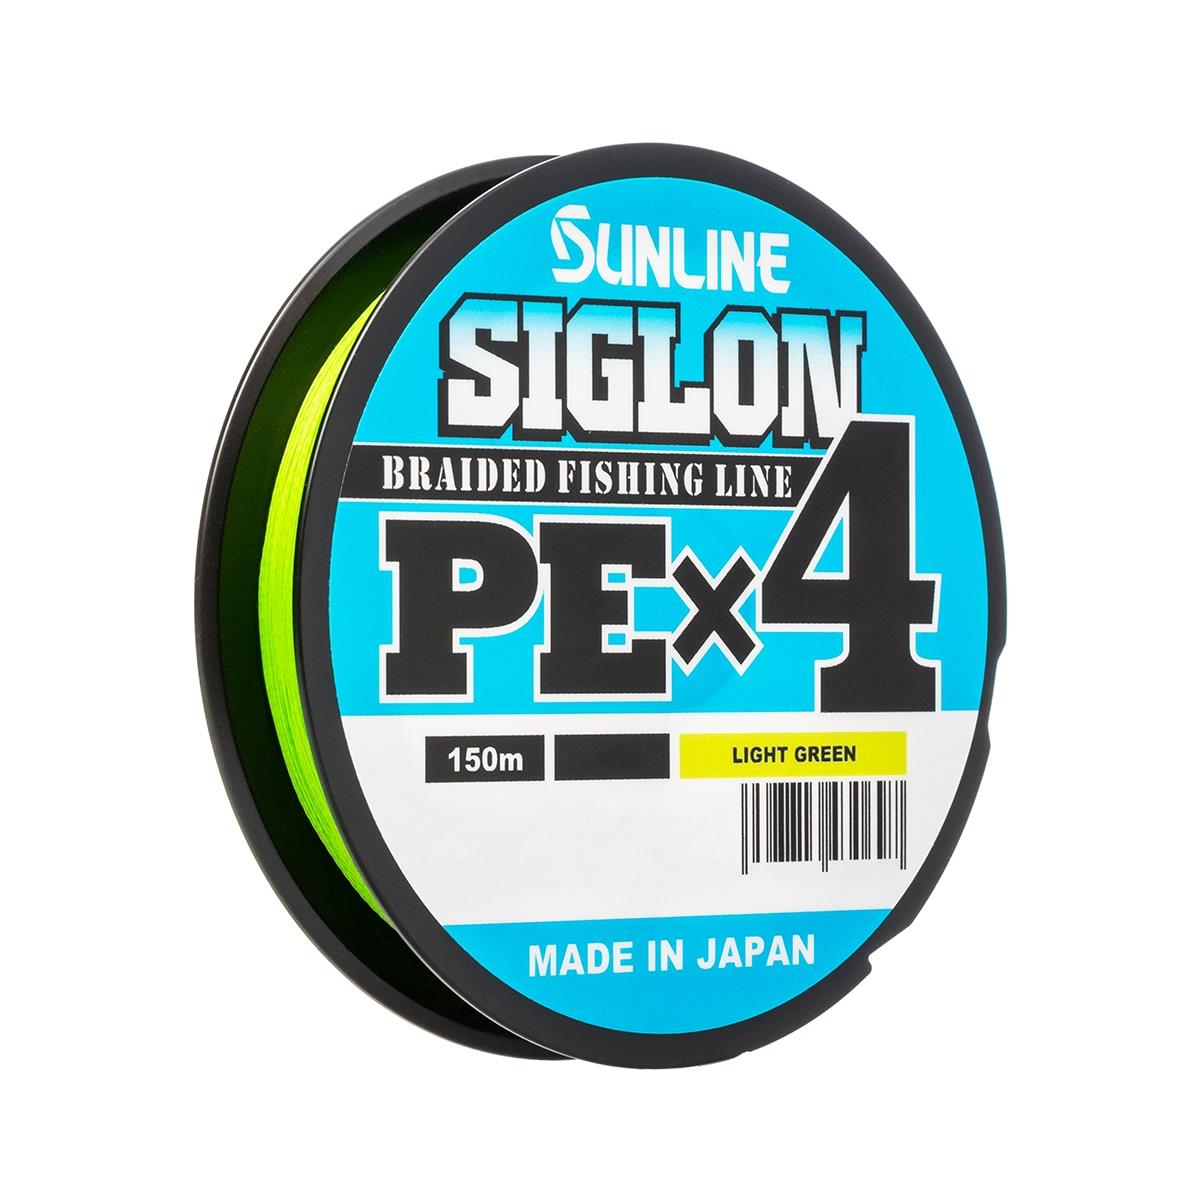 Шнур SIGLON PE×4 150 м (Light green) Sunline шнур для вязания 100% полиэфир 1мм 200м 75±10гр 19 голубой